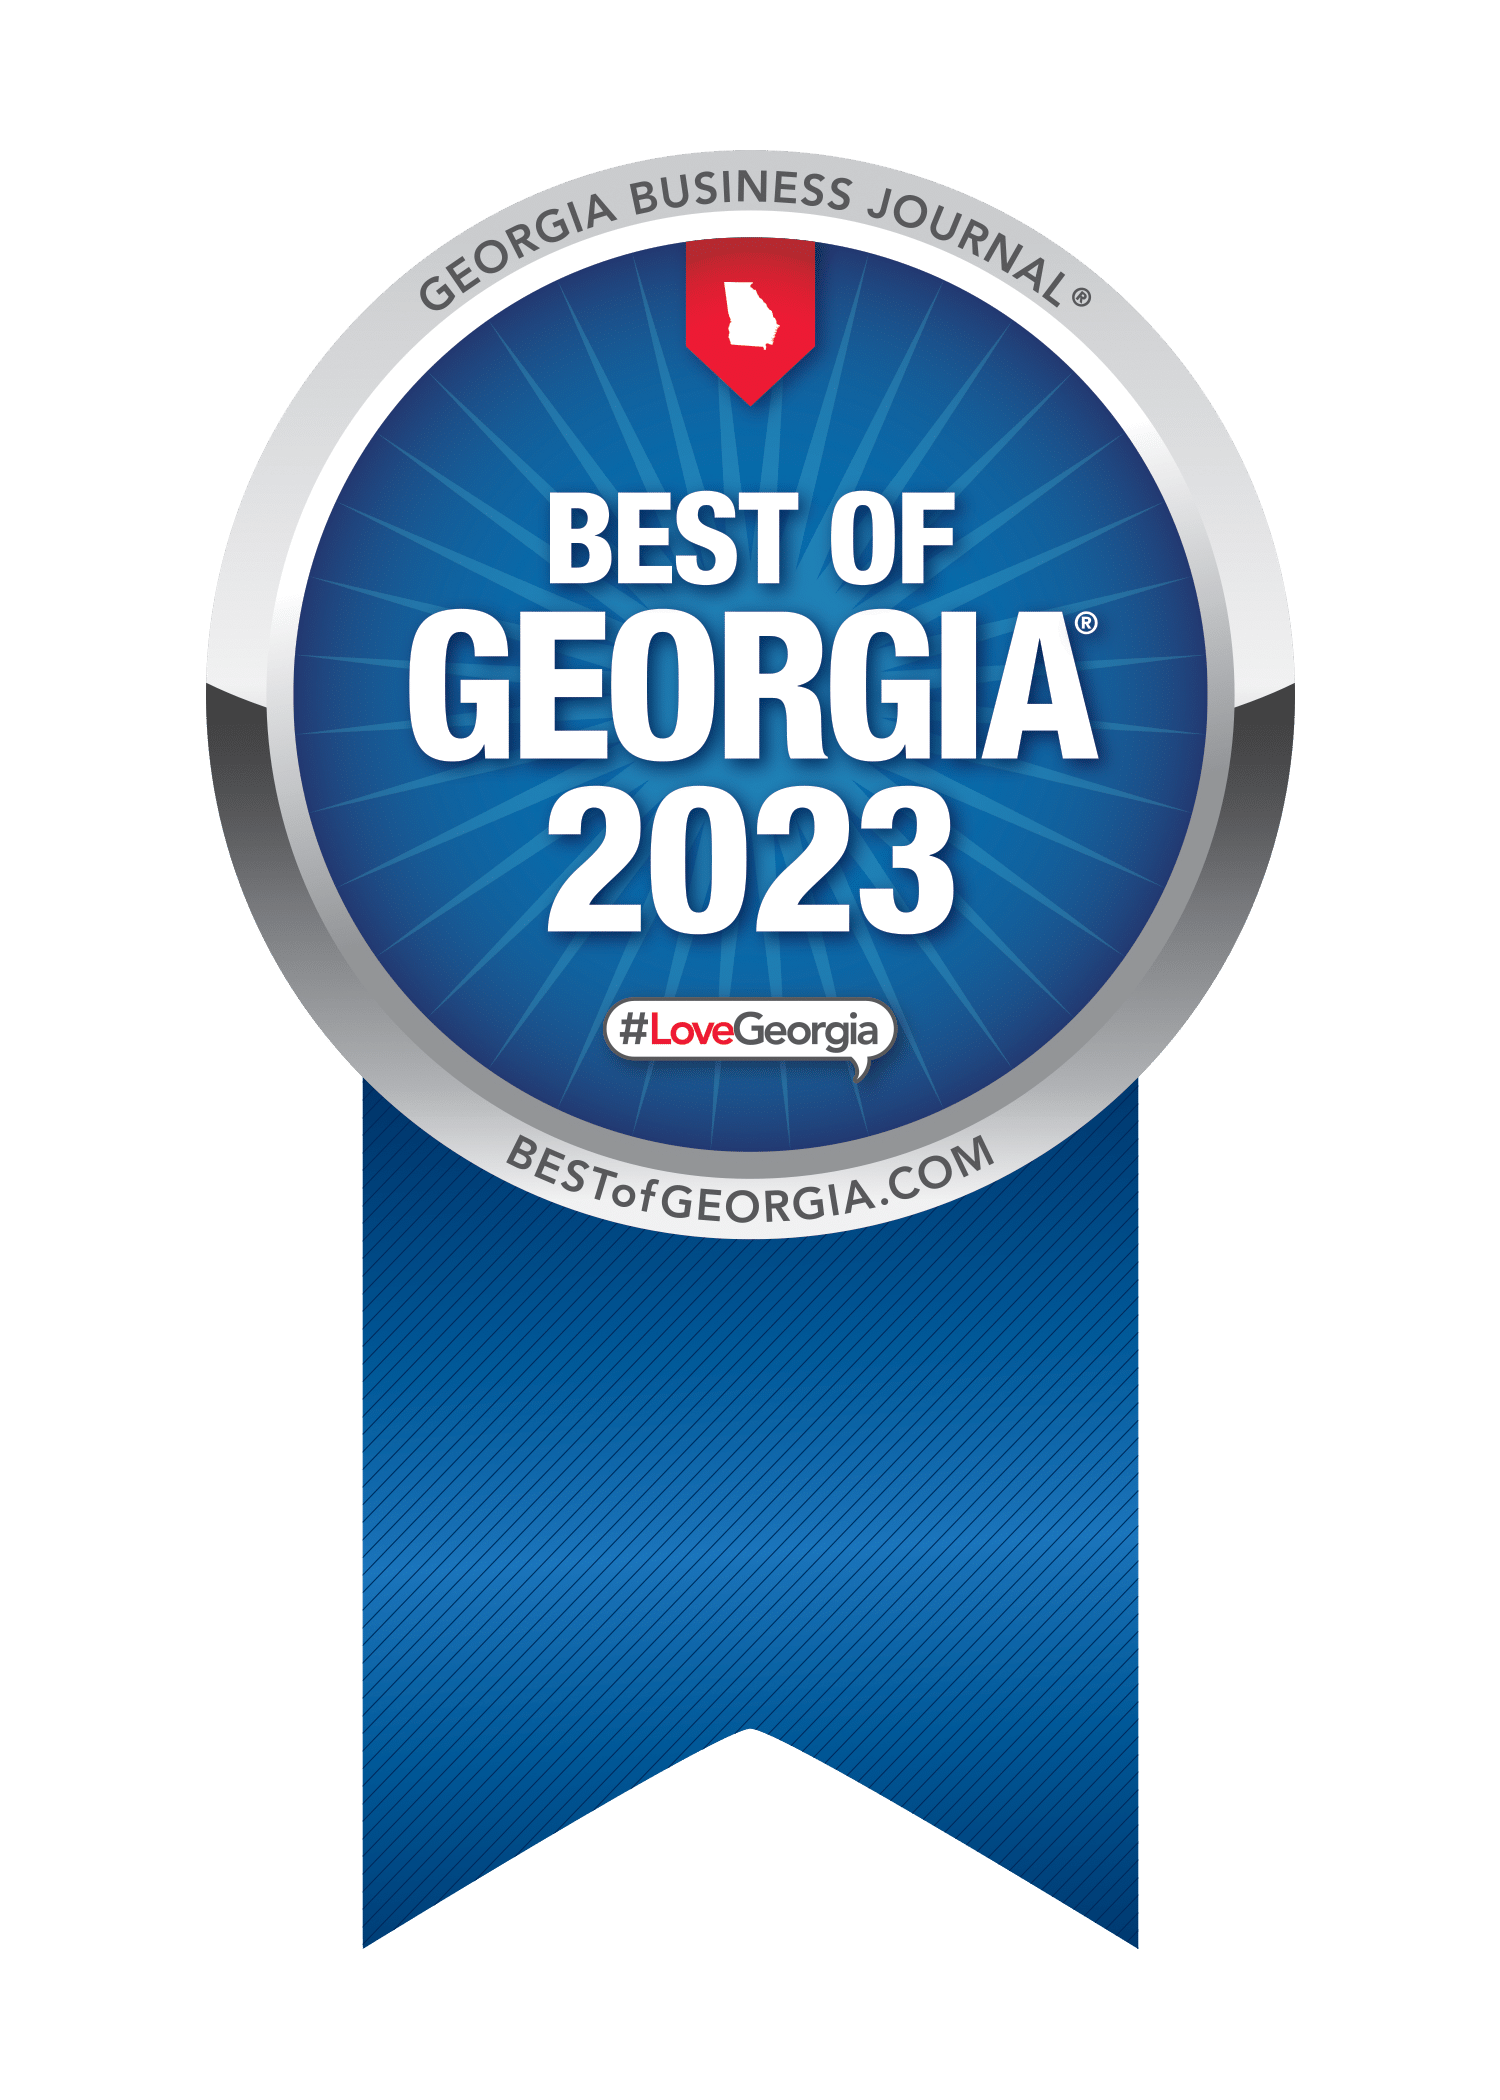 Callaway security voted best of georgia